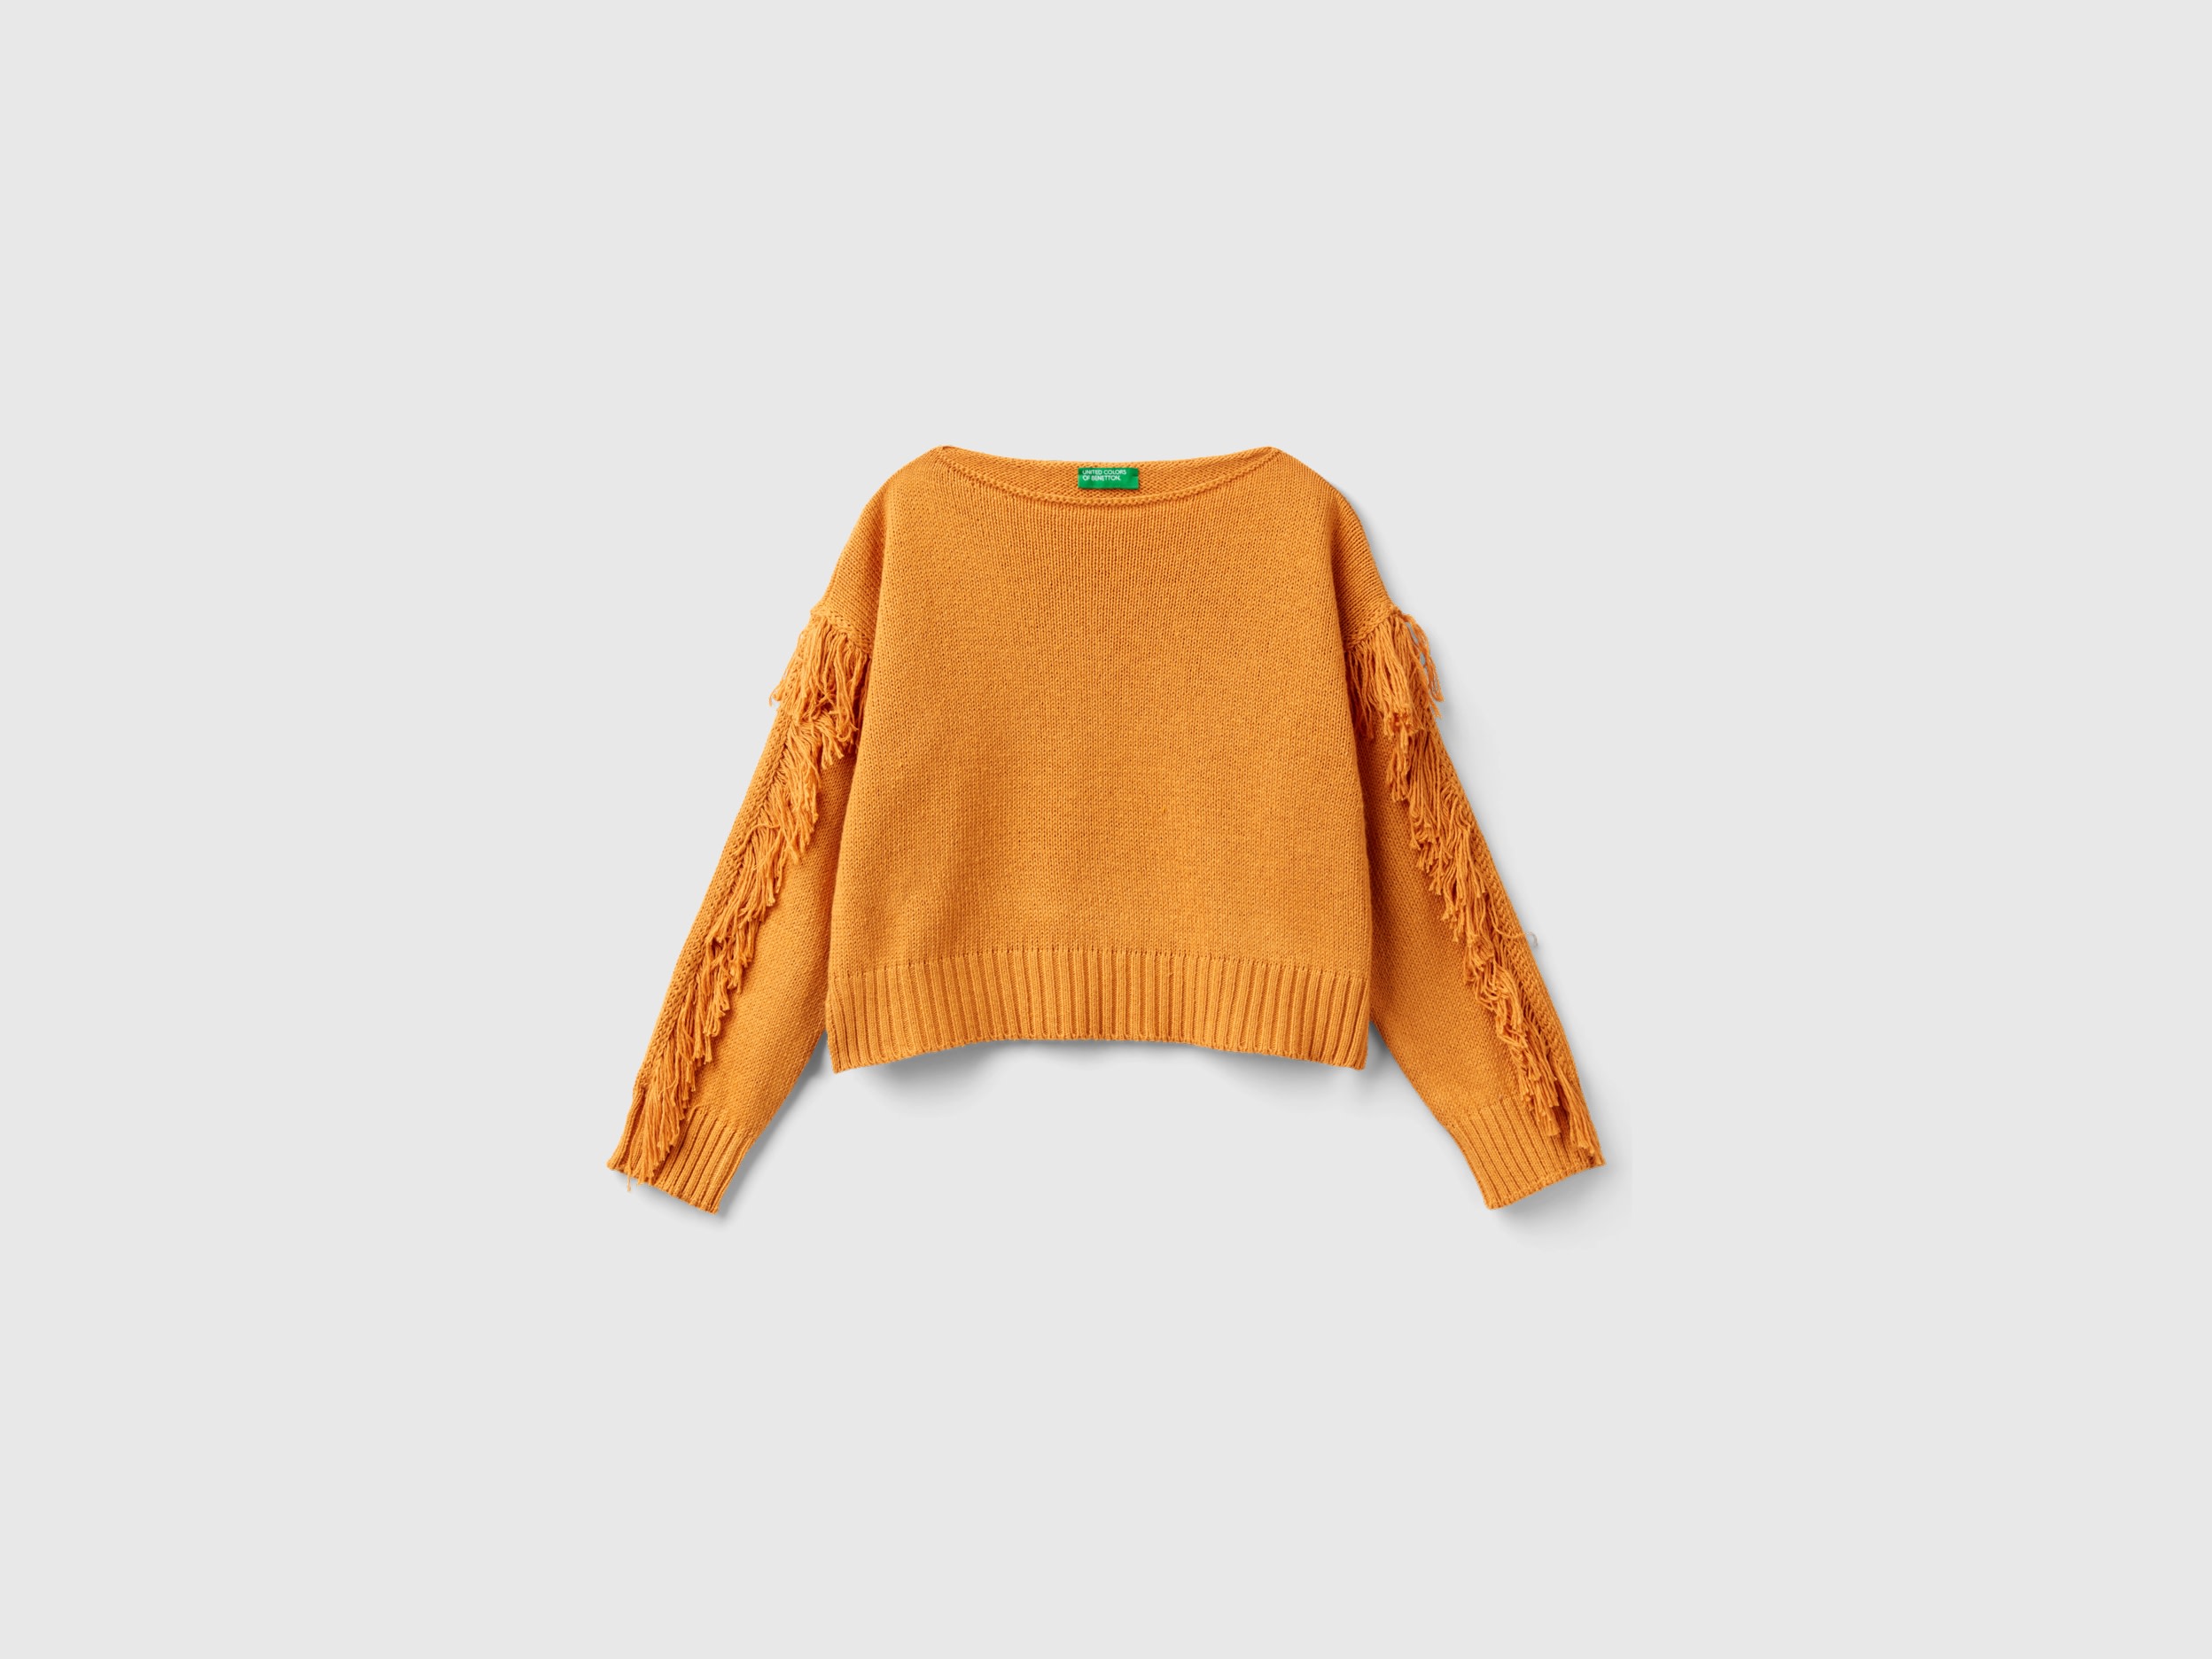 Image of Benetton, Sweater With Fringe, size S, Camel, Kids